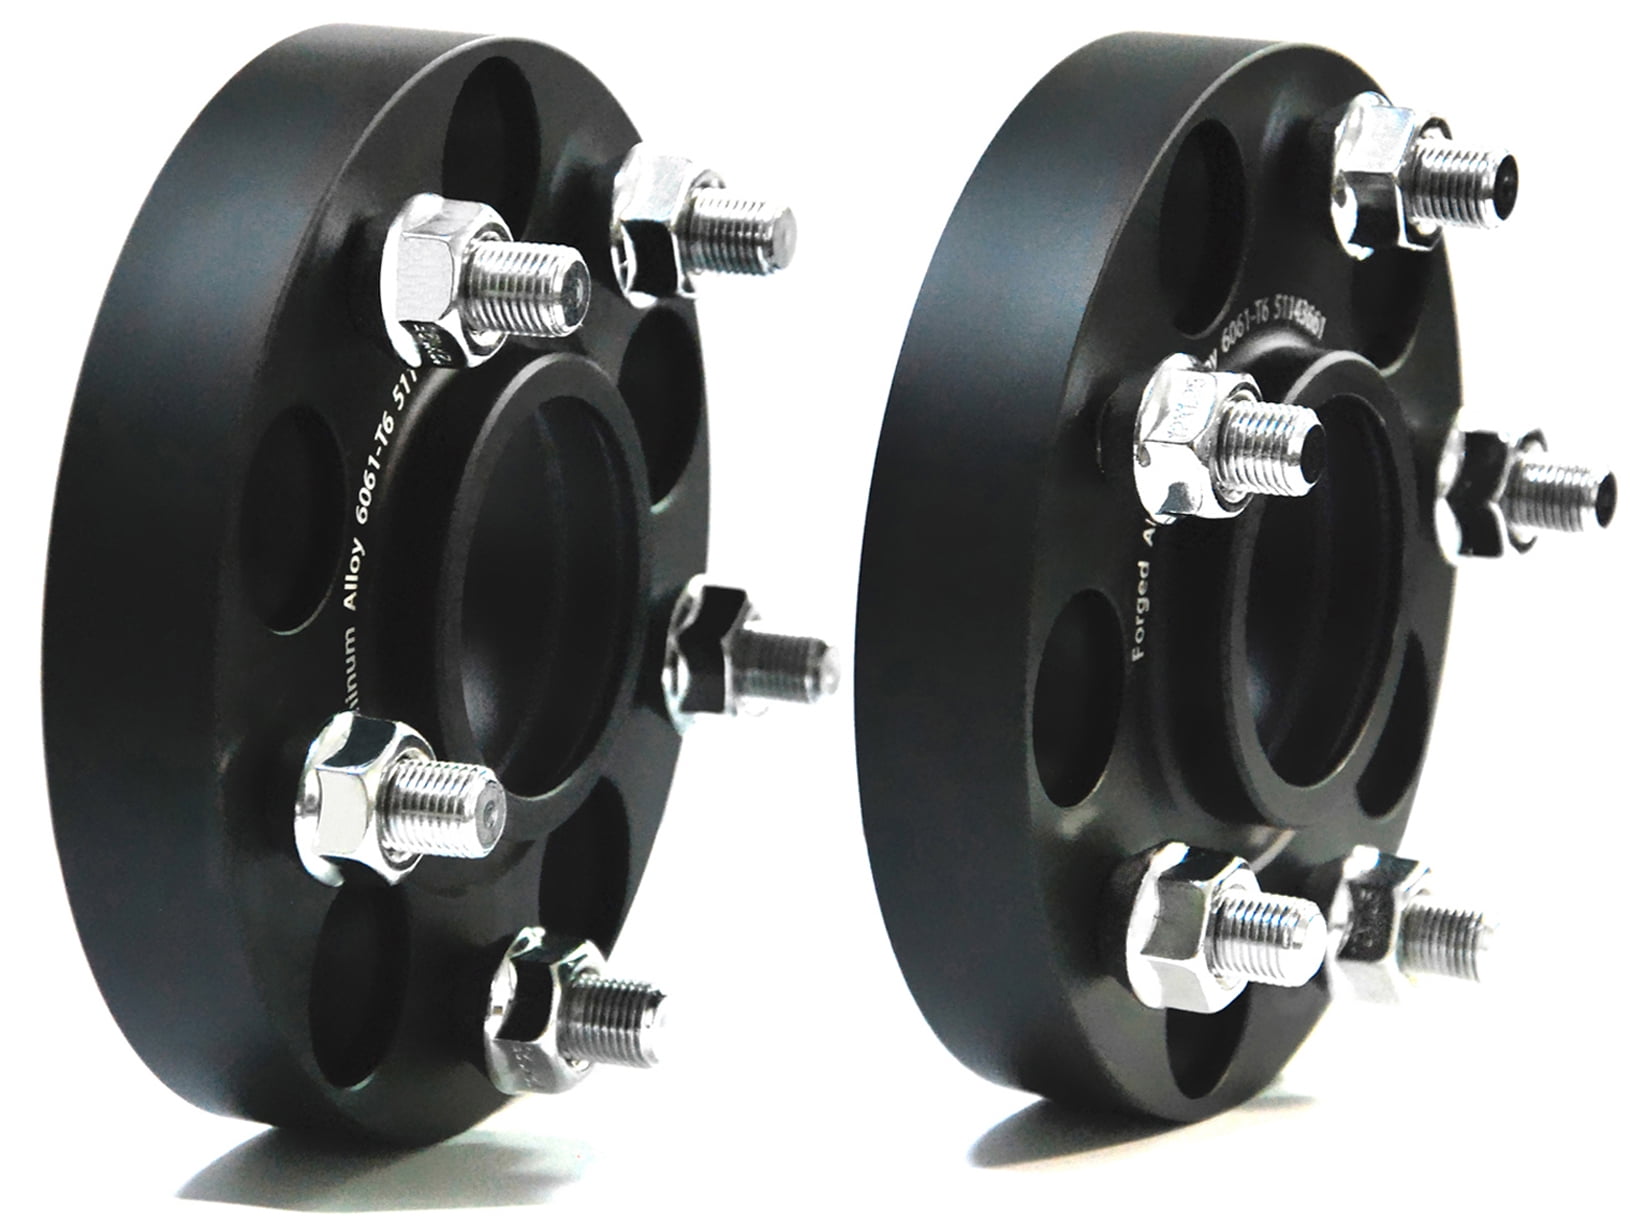 2pcs 20mm Safe Wheel Hub Spacer fit for Nissan Juke,Xtrail,S13,S14,Silvia,GTR 